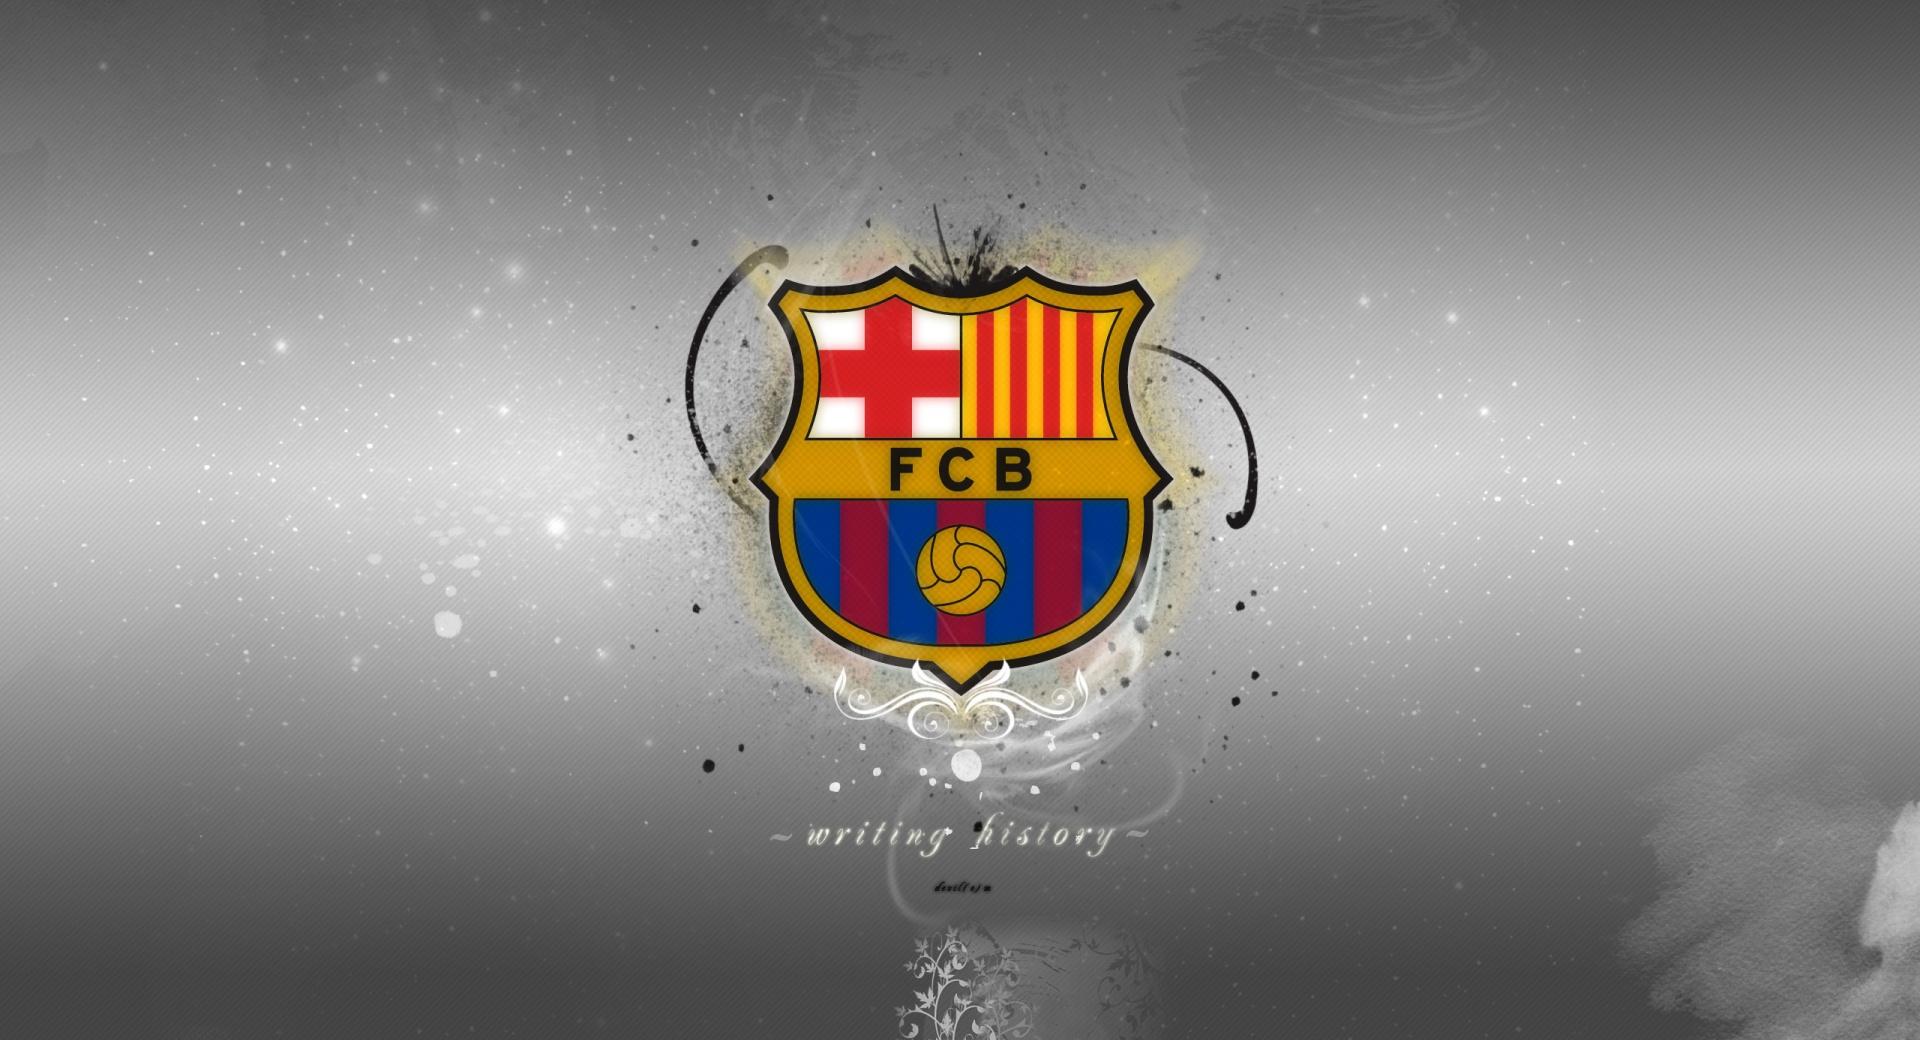 FC Barcelona Emblem at 1152 x 864 size wallpapers HD quality